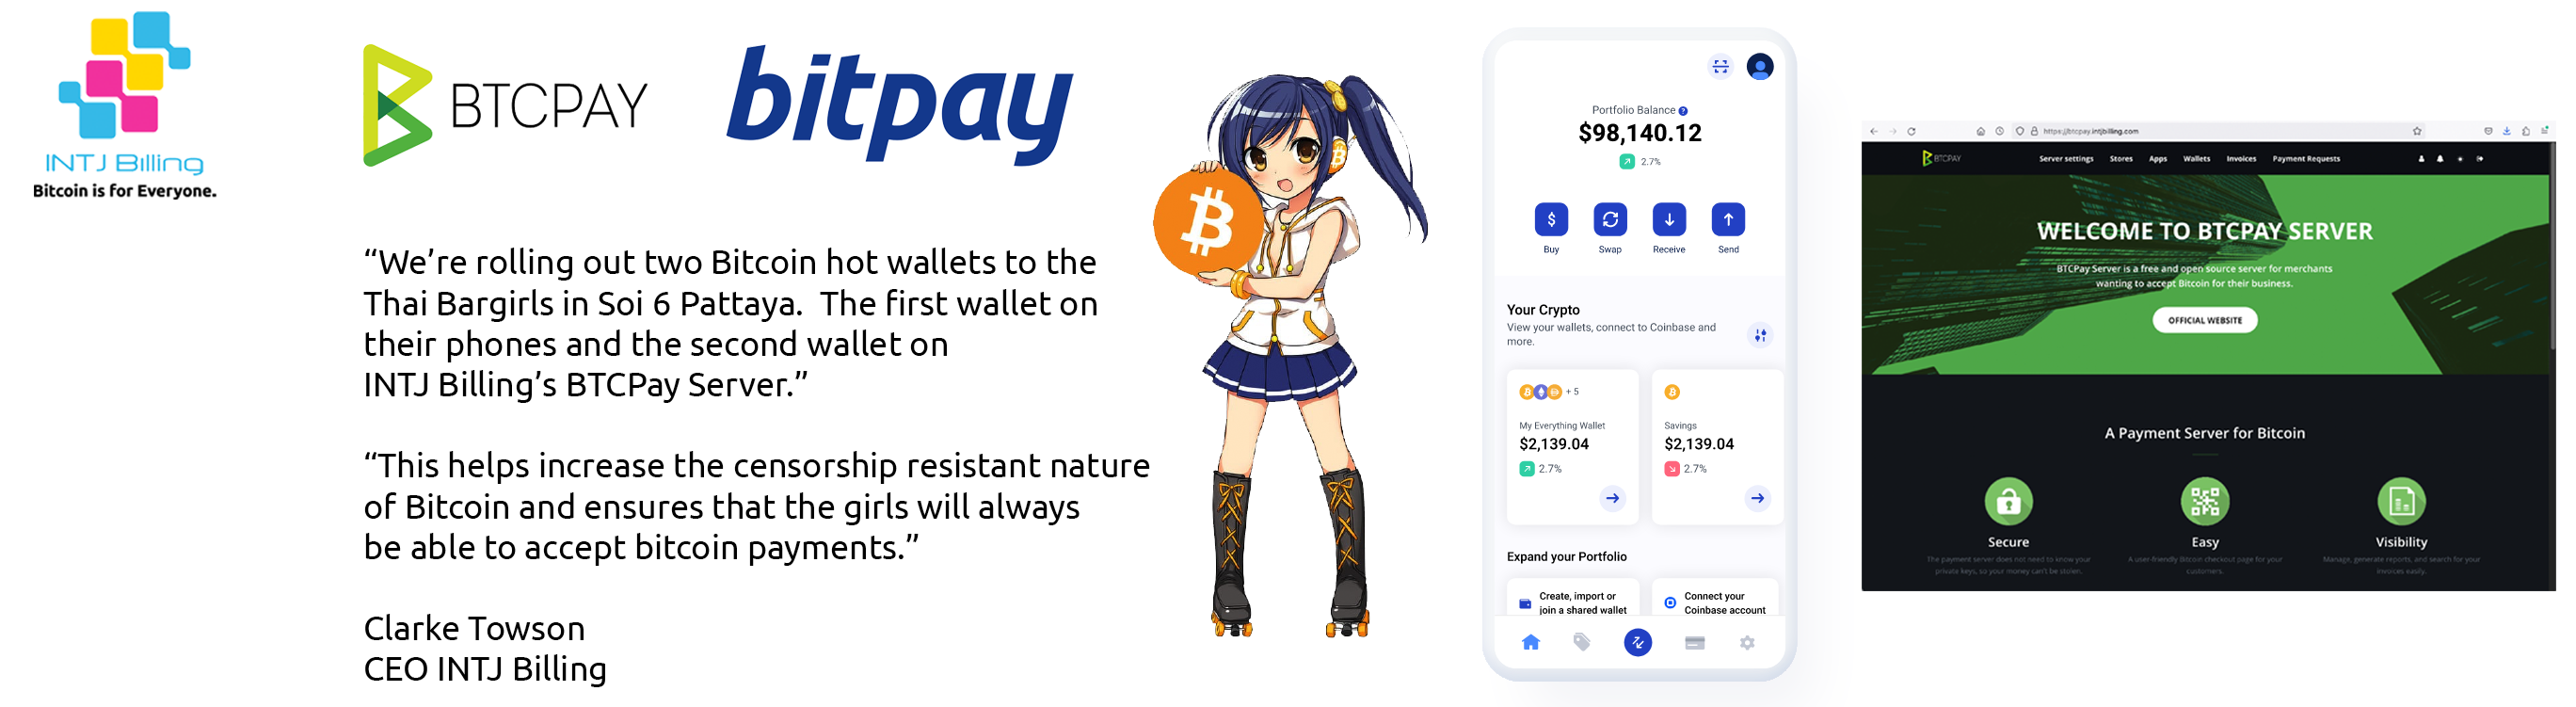 INTJ Billing Two Bitcoin hot wallets